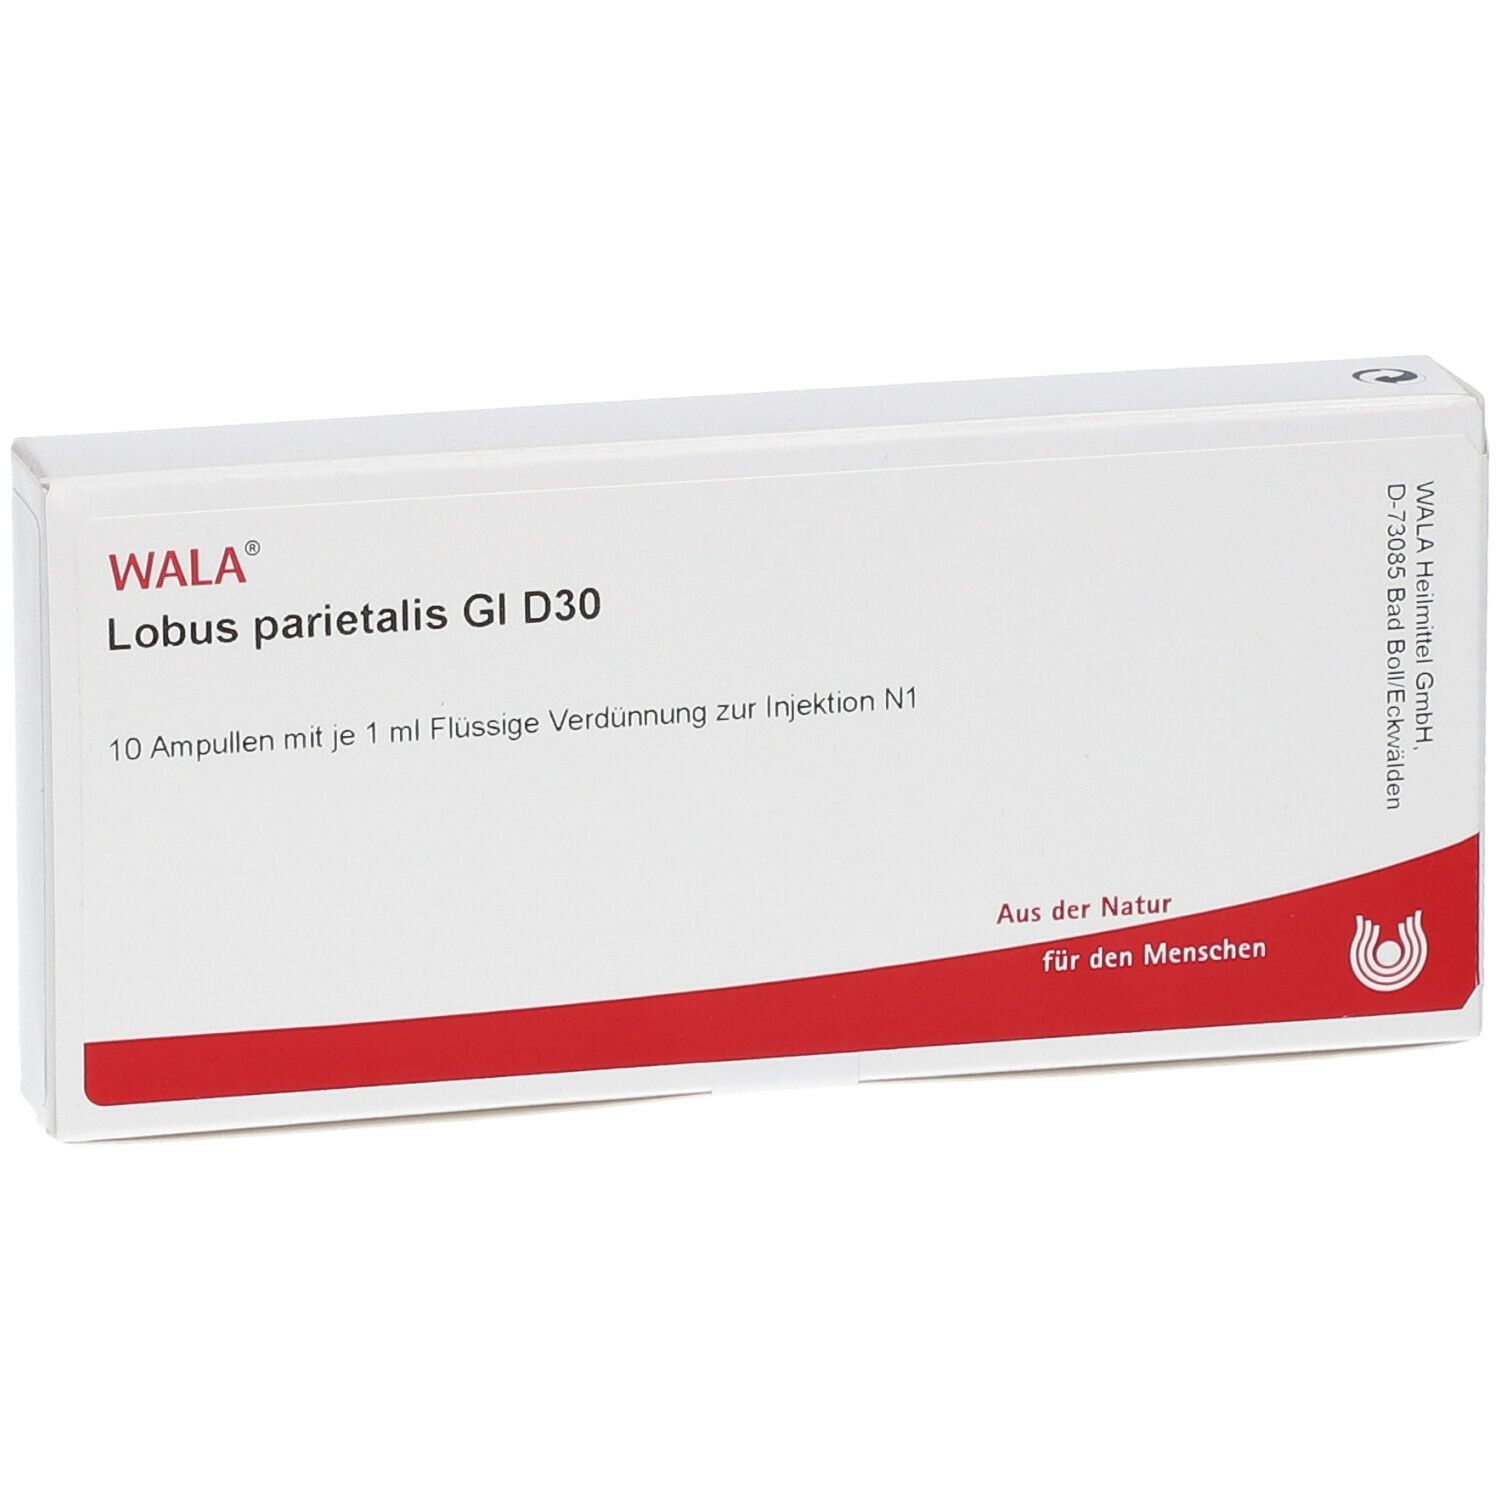 WALA® Lobus parietalis Gl D 30